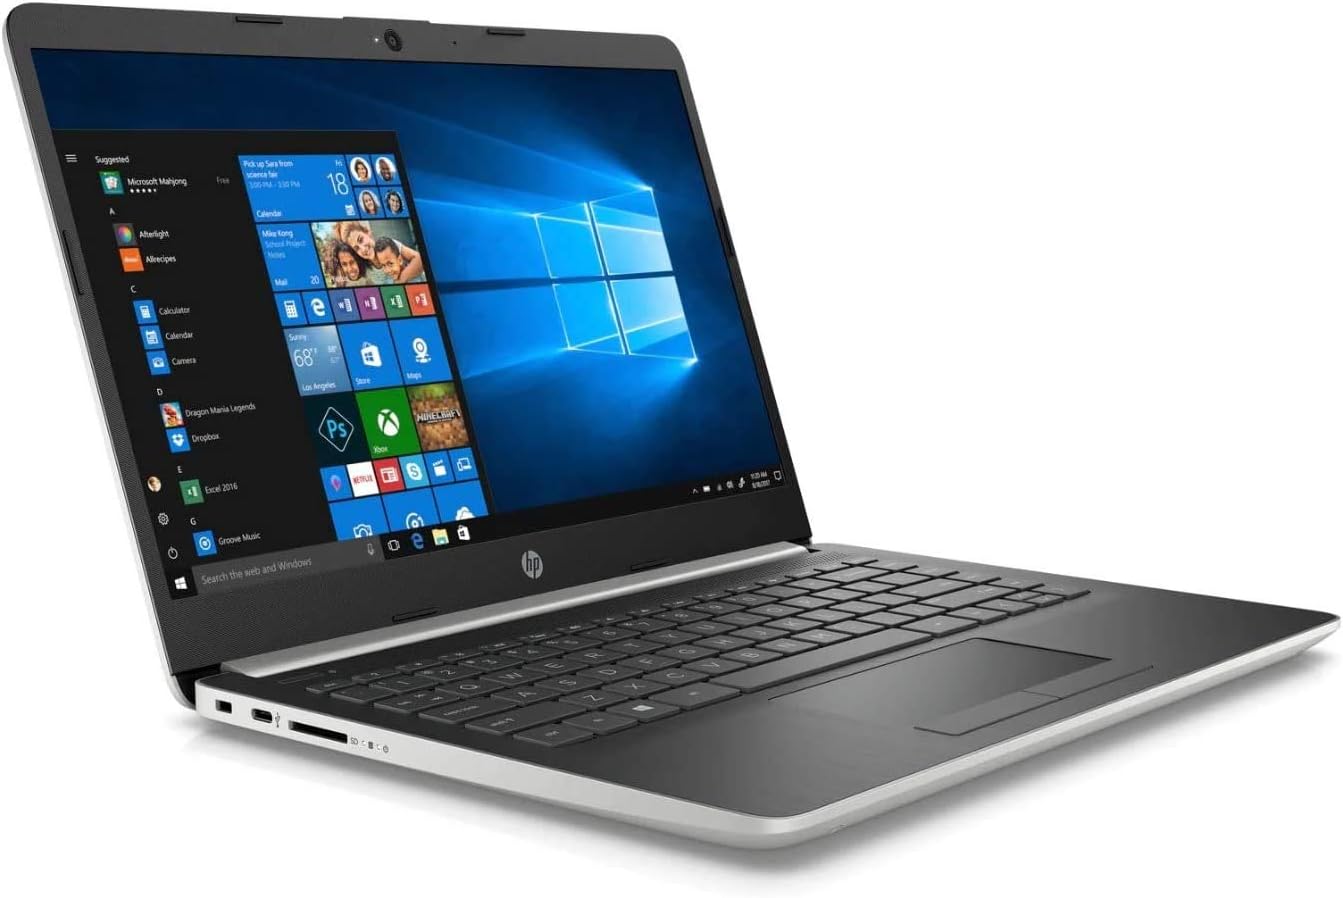 HP Notebook 14 inches 14-cf1015cl, Core i5-8265U, 8GB RAM/256GB SSD, Natural Ash Silver (Renewed)